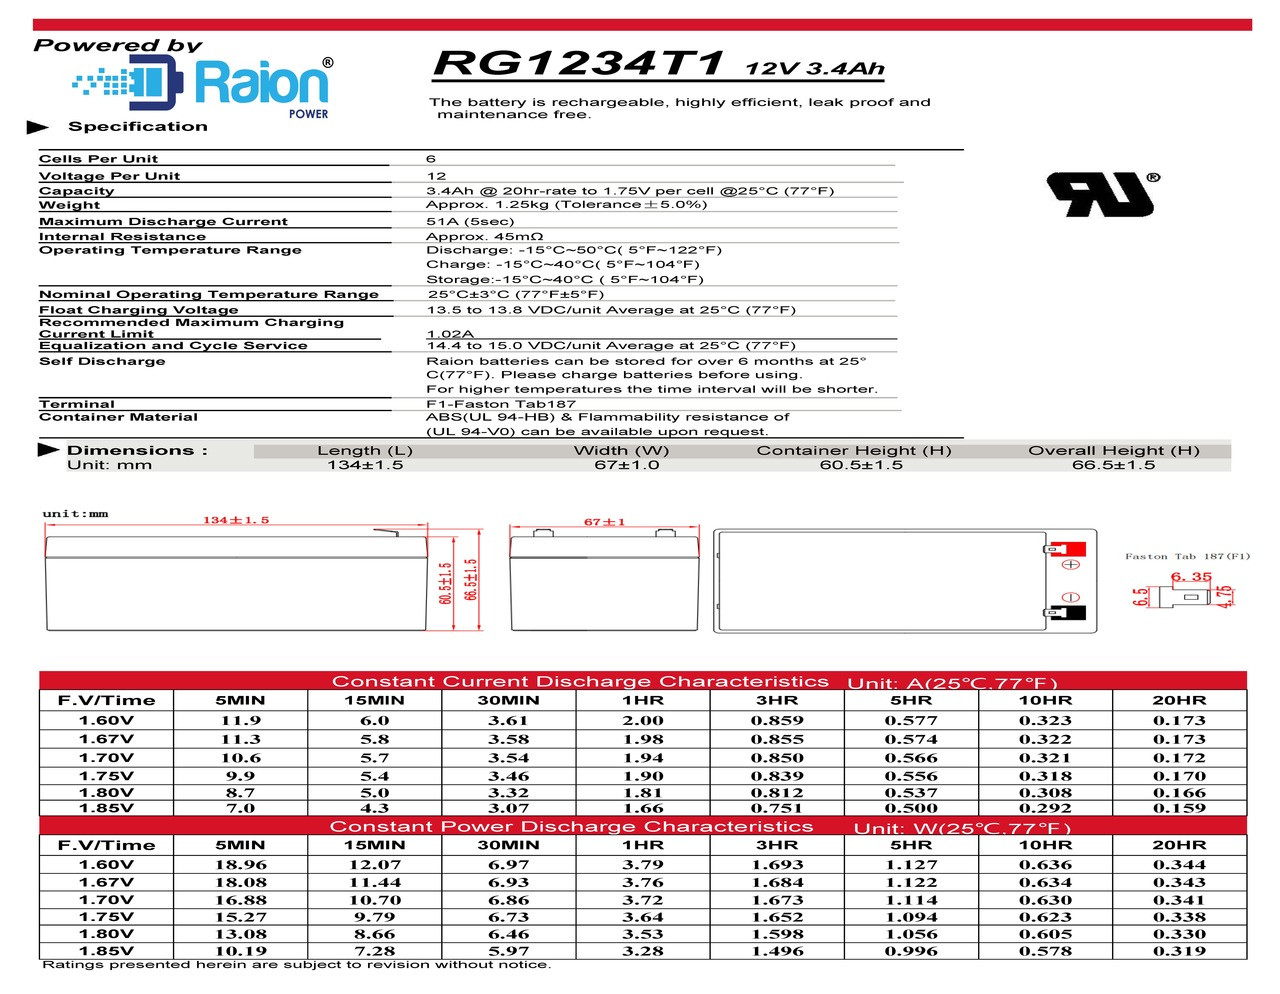 Raion Power RG1234T1 12V 3.4Ah Battery Data Sheet for Allied Healthcare L190 Portable Suction Unit